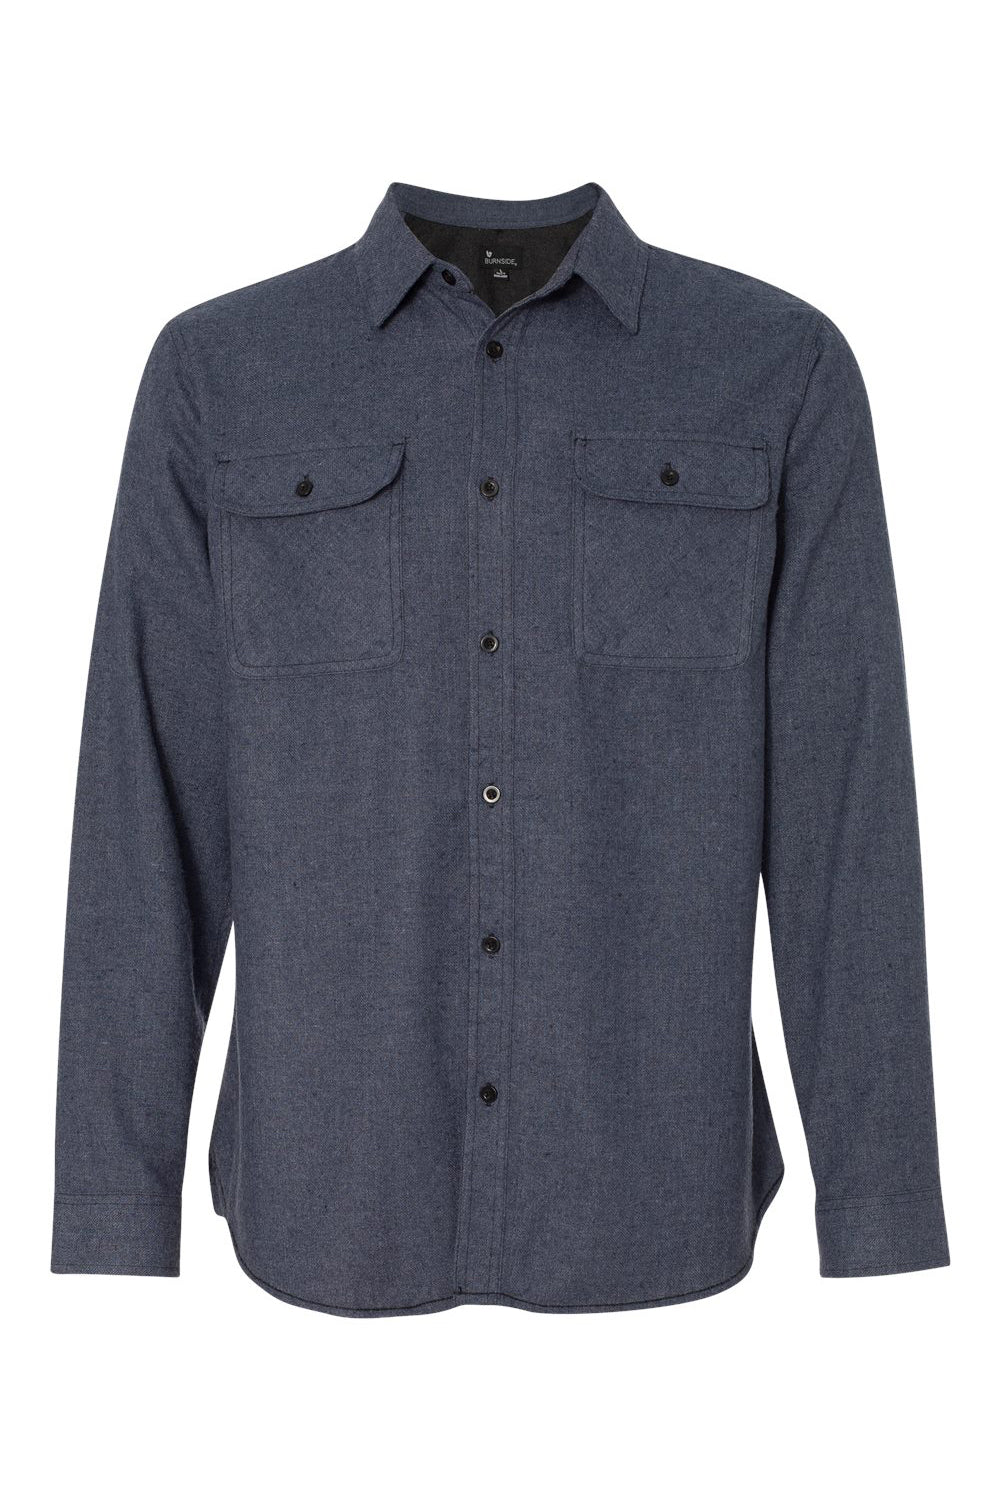 Burnside BU8200/8200 Mens Flannel Long Sleeve Button Down Shirt w/ Double Pockets Denim Blue Flat Front